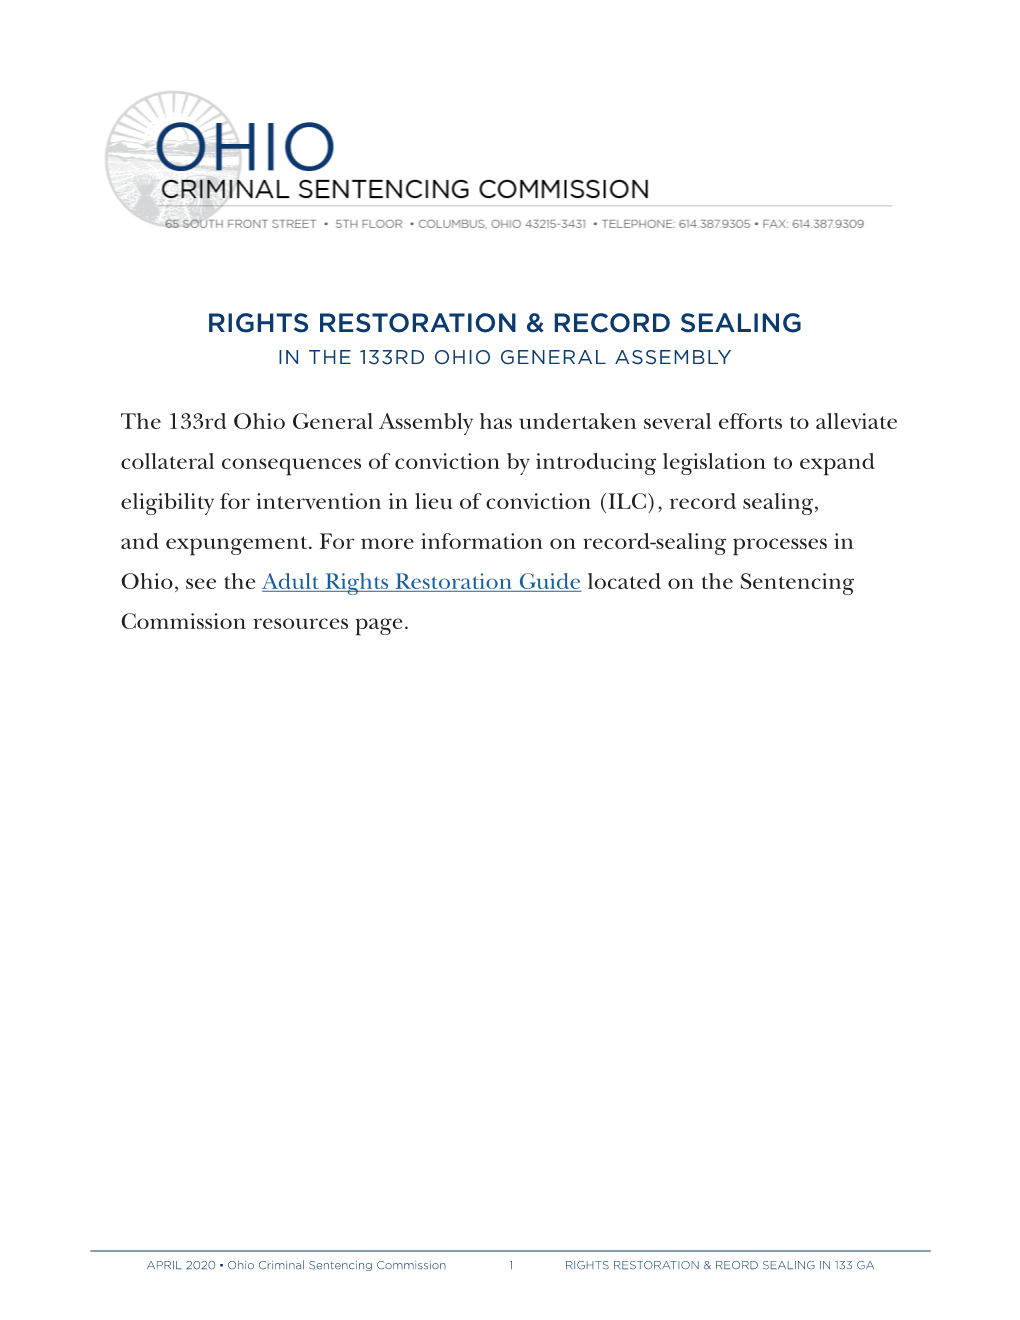 Rights Restoration & Record Sealing